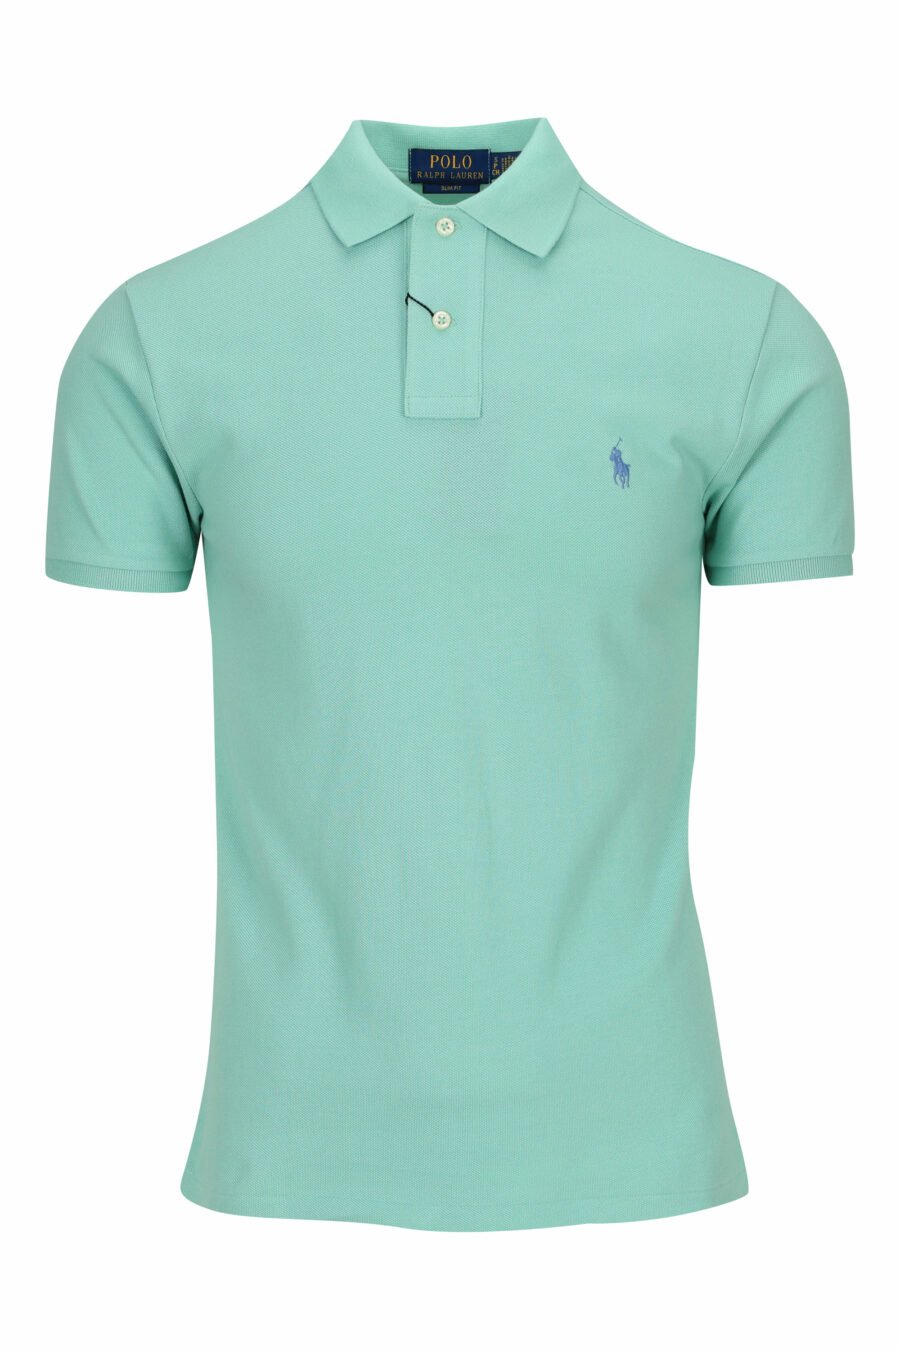 Turquoise polo shirt with blue "polo" mini-logo - 3616536209366